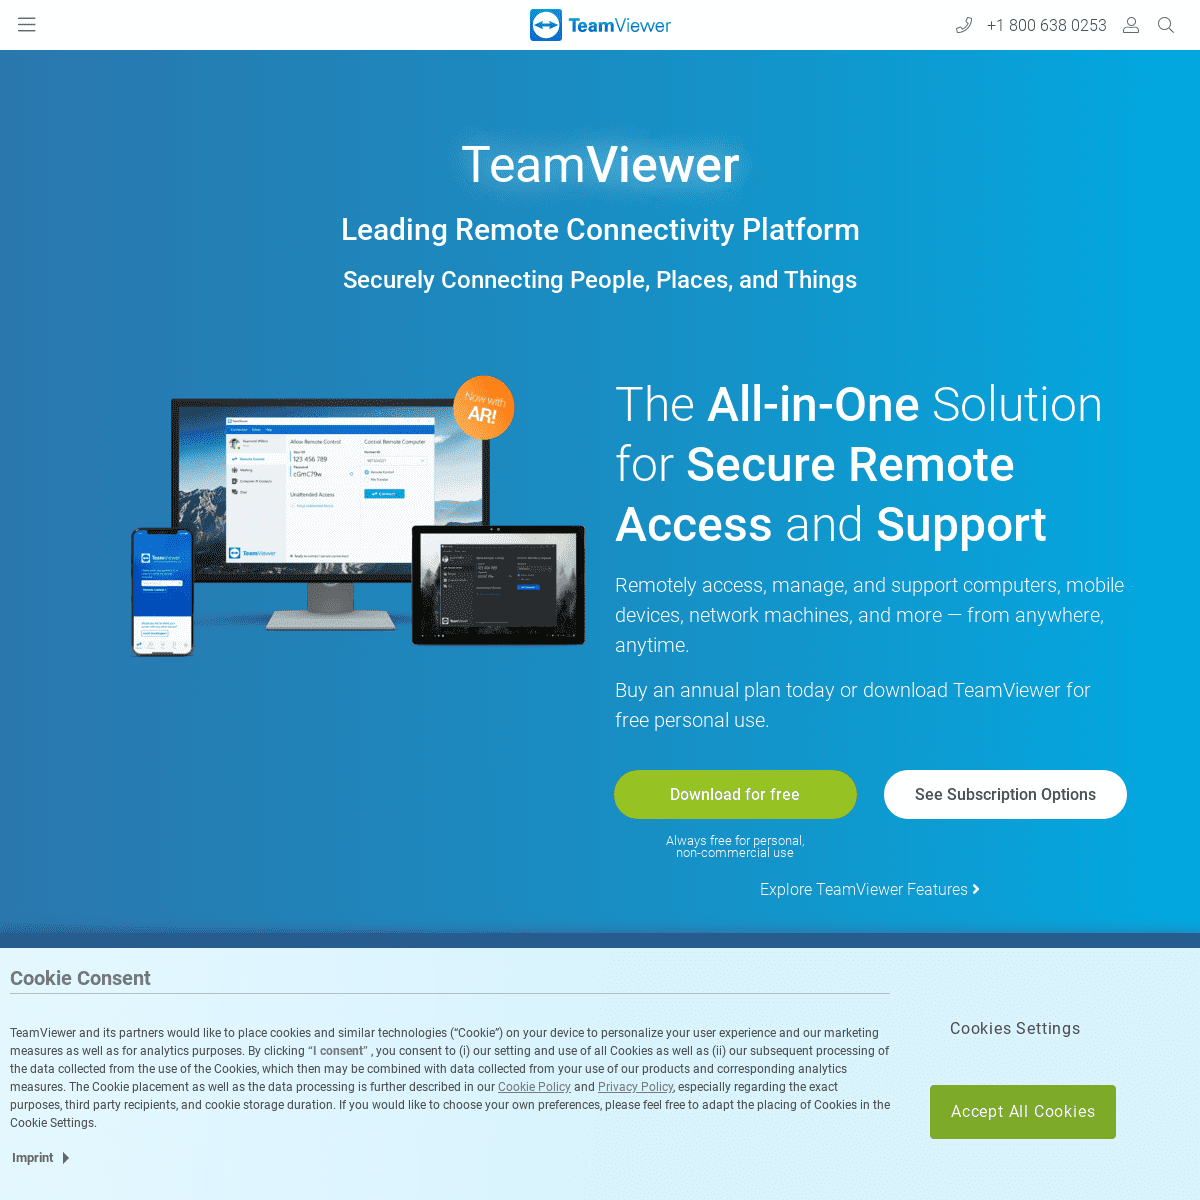 A complete backup of teamviewer.com